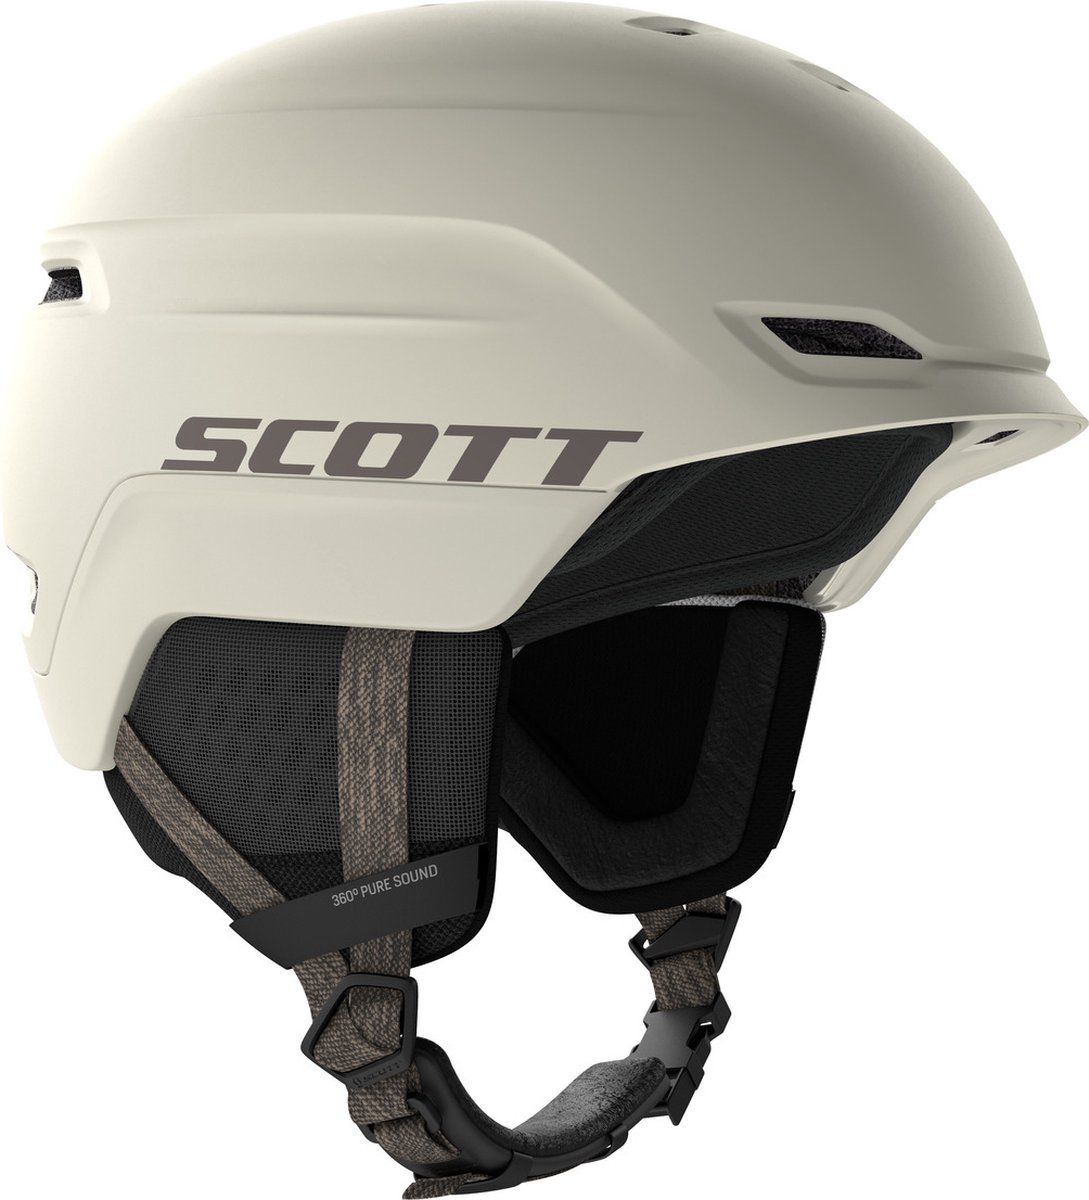 Scott Chase 2 Plus skihelm - beige - 51-55 cm